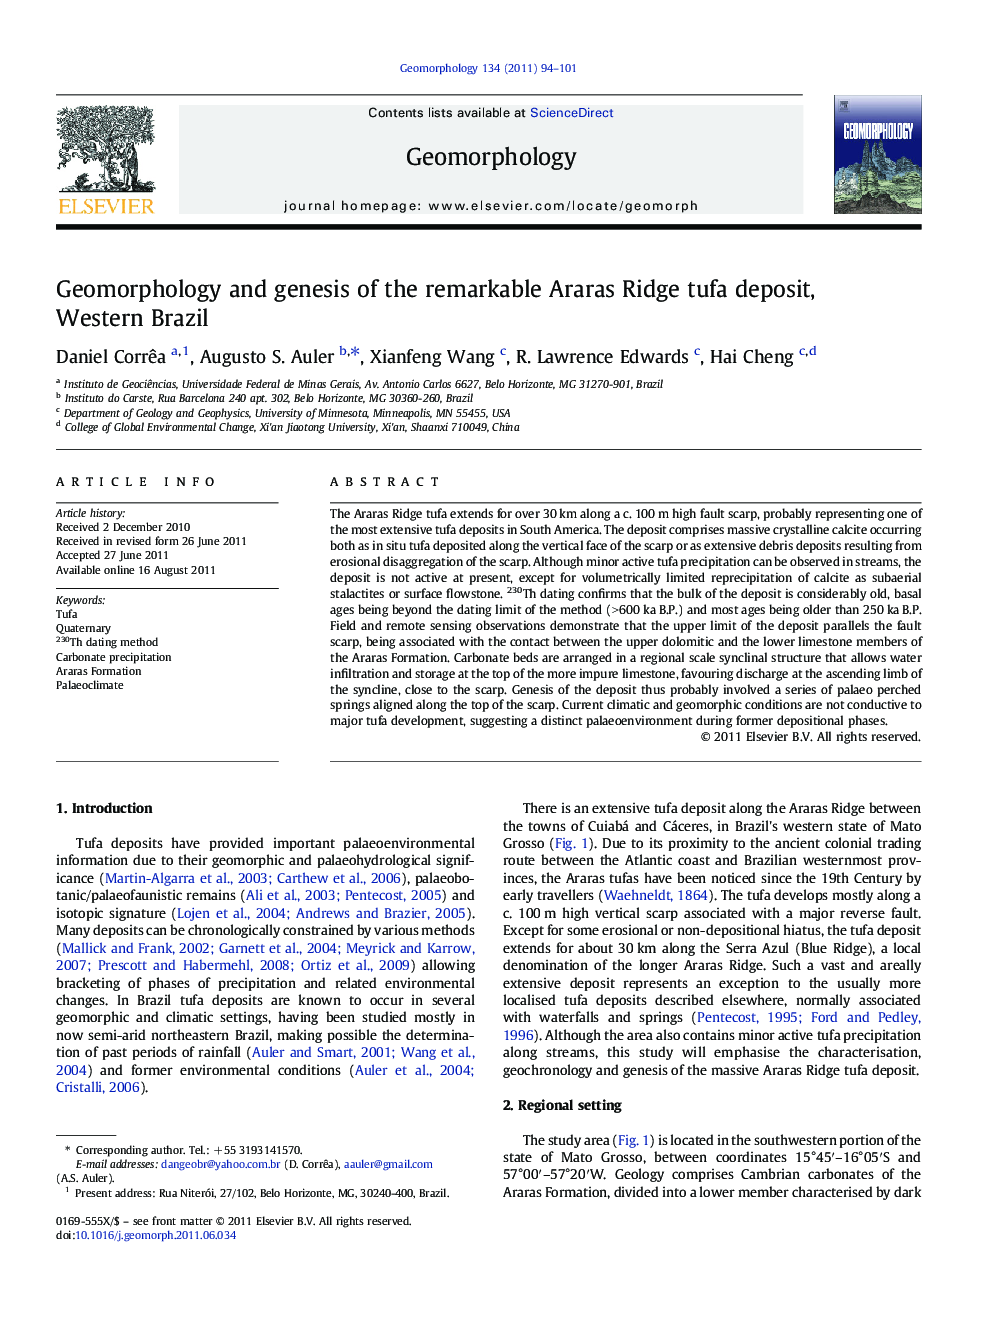 Geomorphology and genesis of the remarkable Araras Ridge tufa deposit, Western Brazil